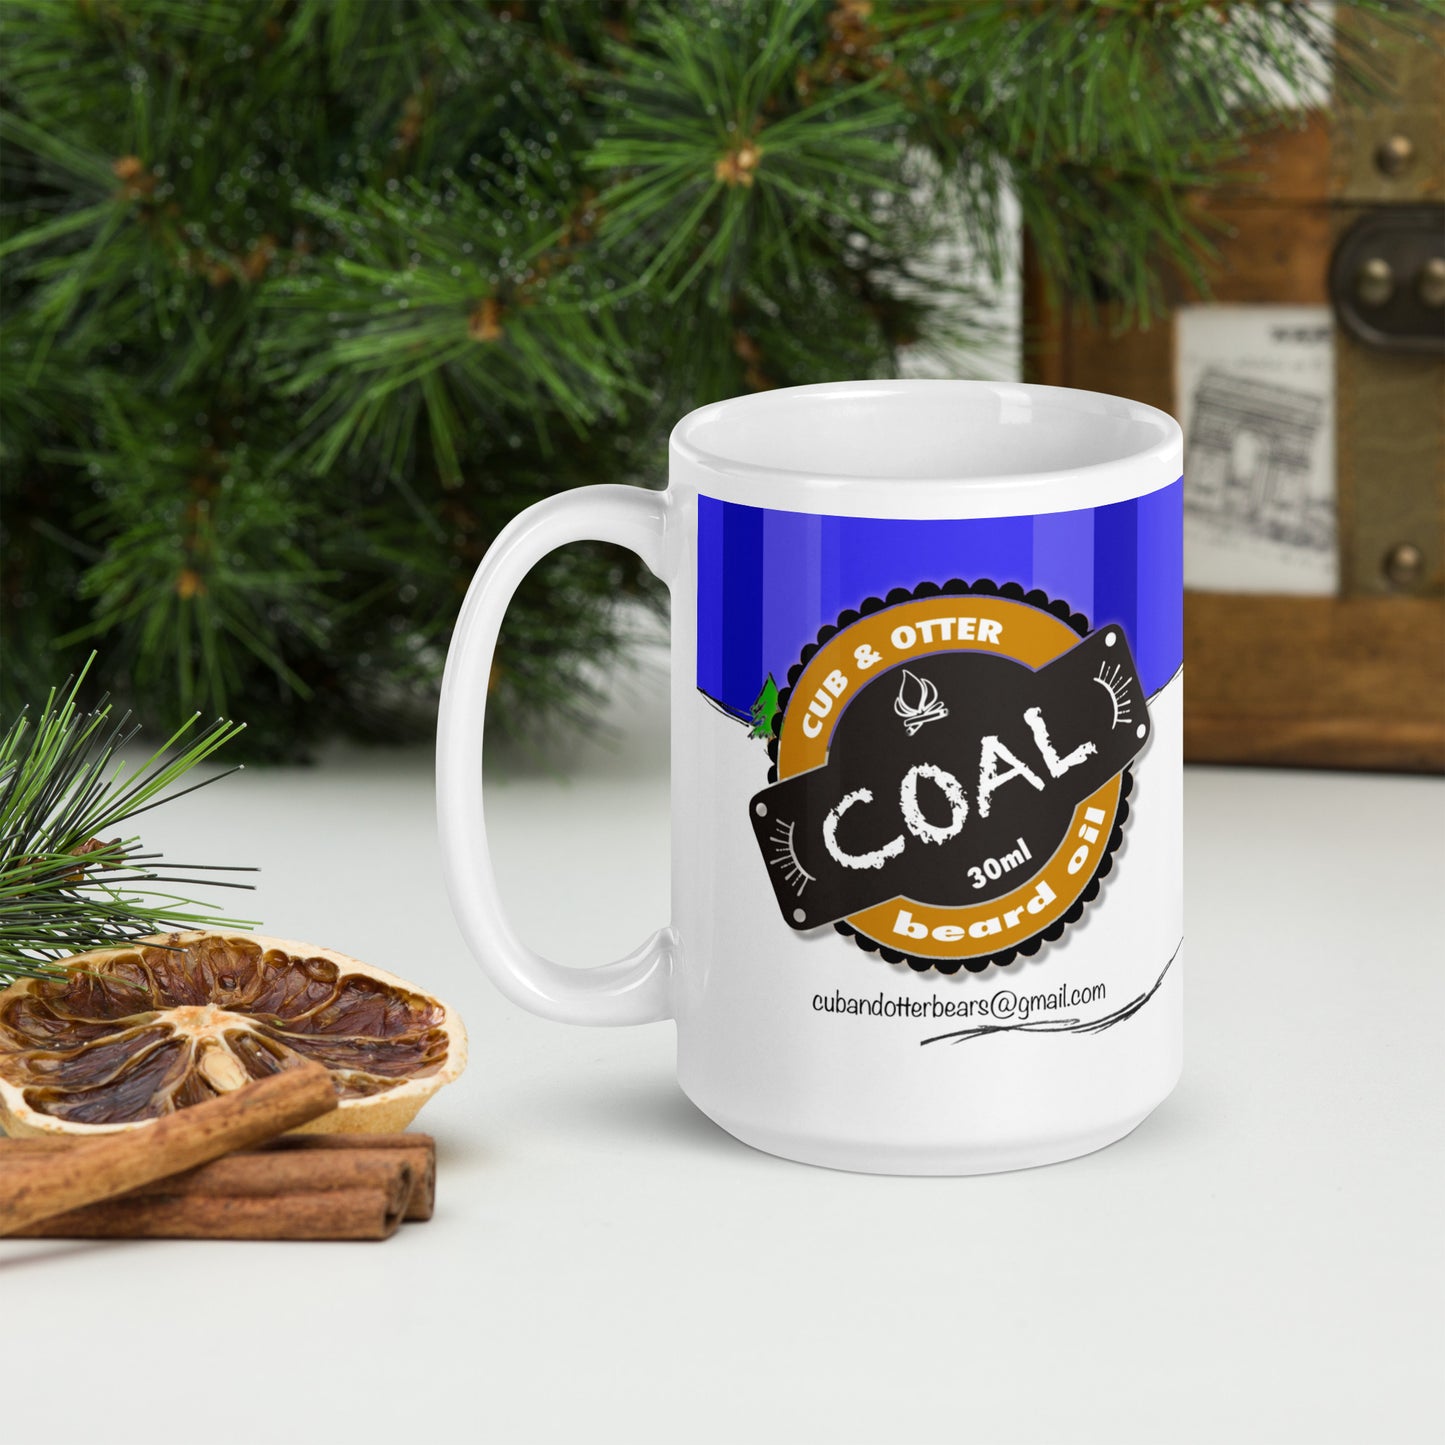 Coal Mug